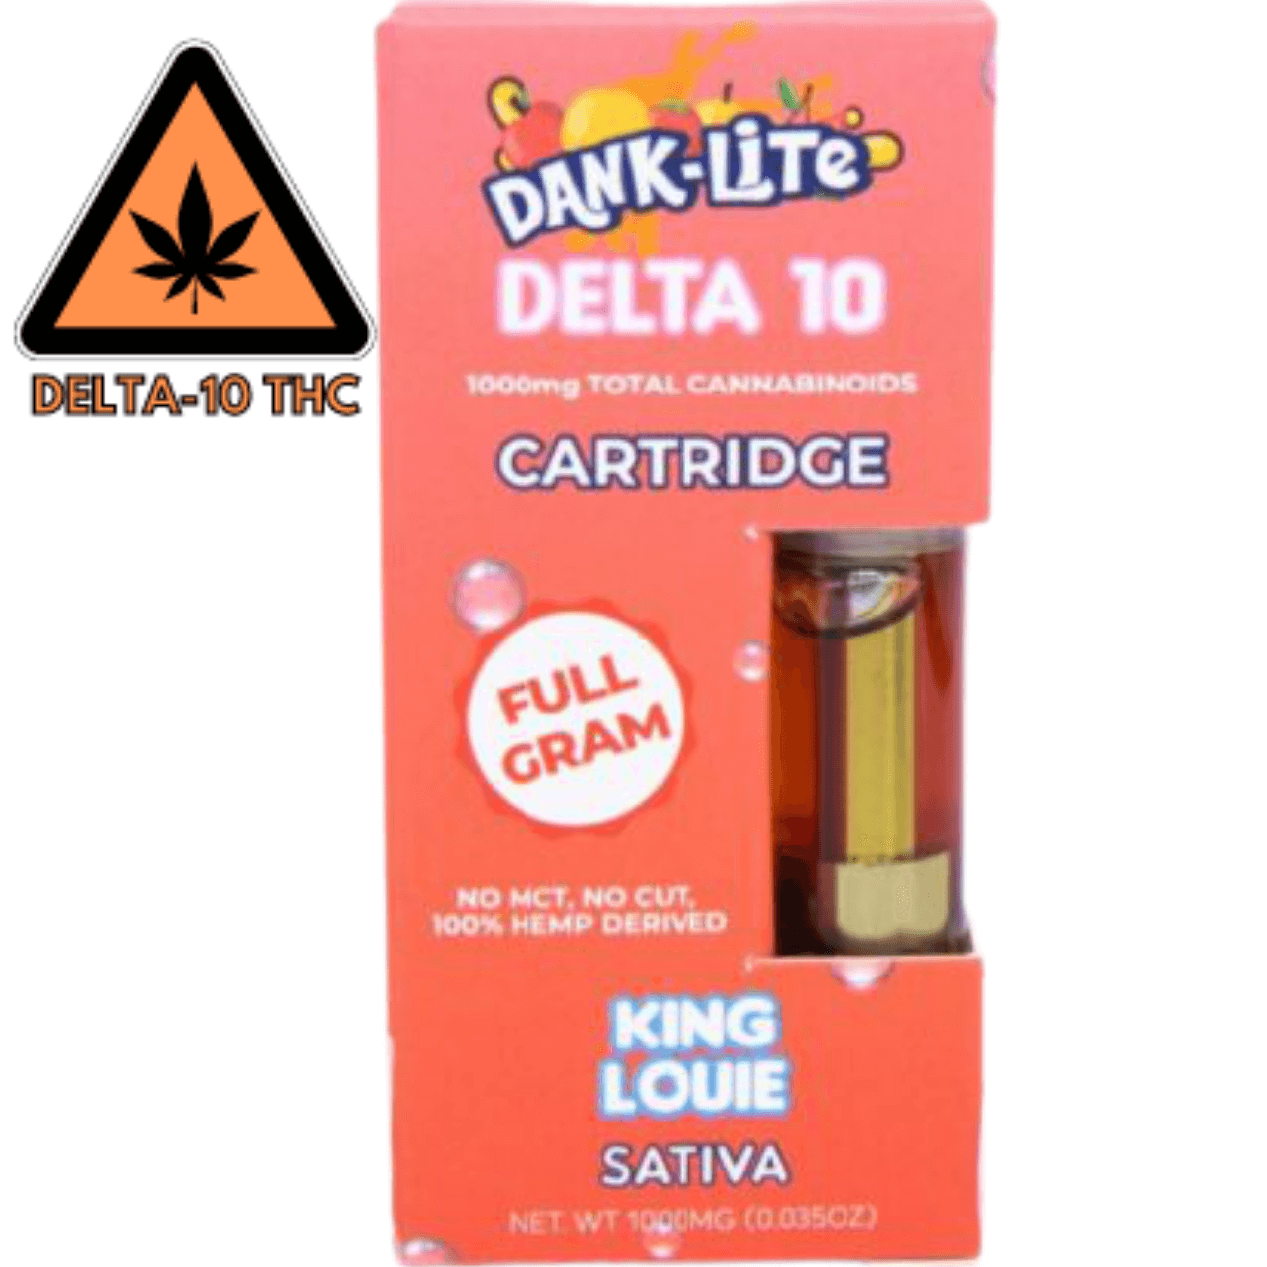 Dank Lite | Delta 10 + Delta 8 Cartridges - 1mL Best Price